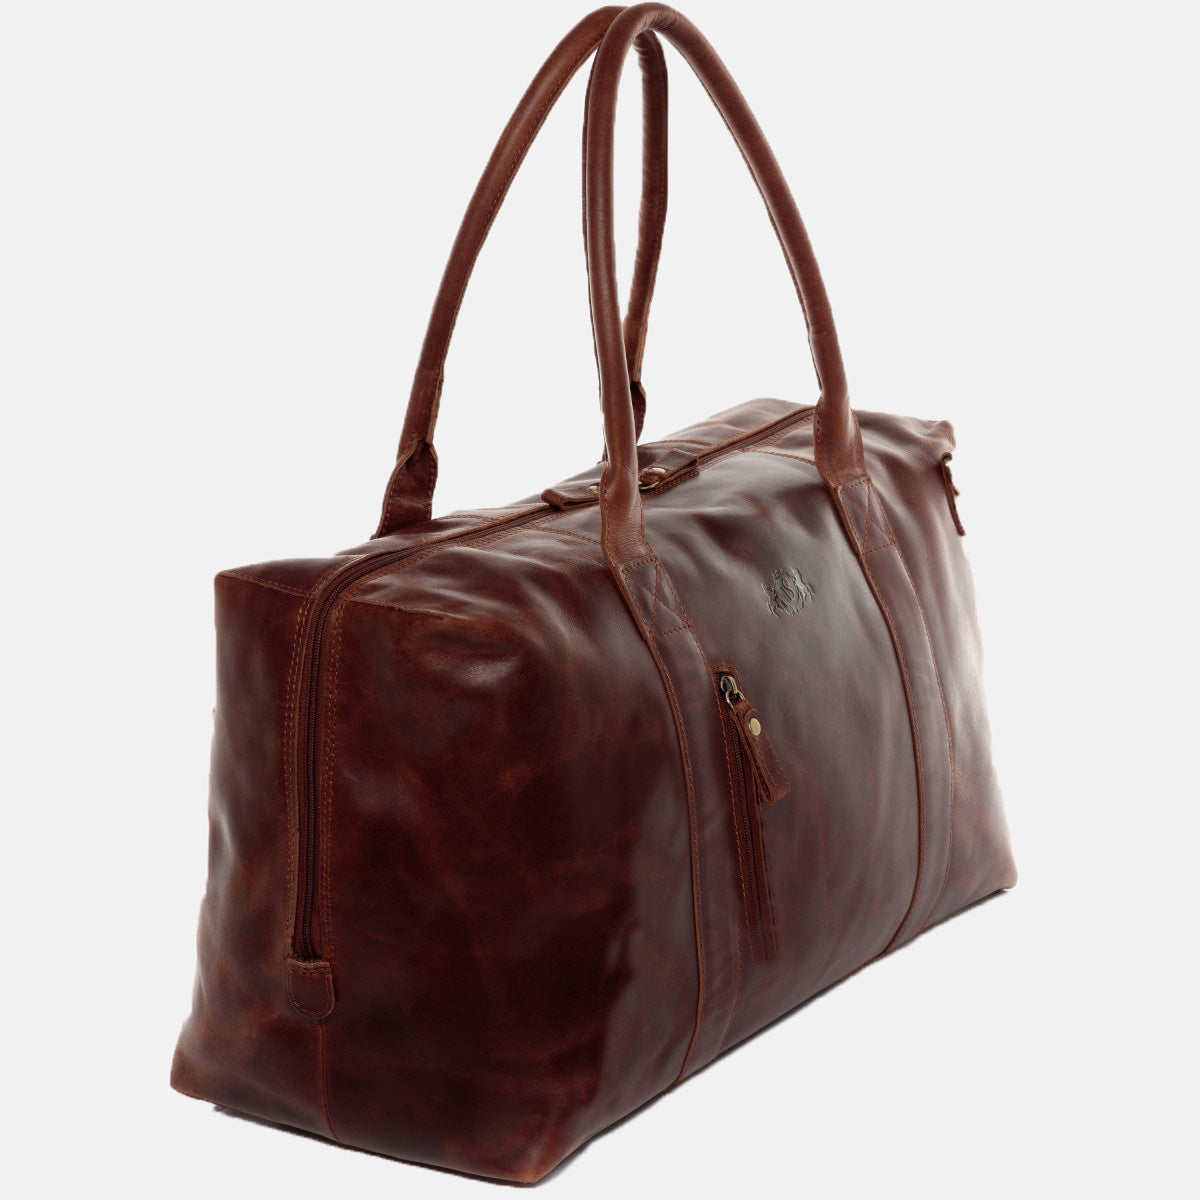 SID & VAIN travel bag YALE ZIP natural leather brown cognac sports bag travel bag